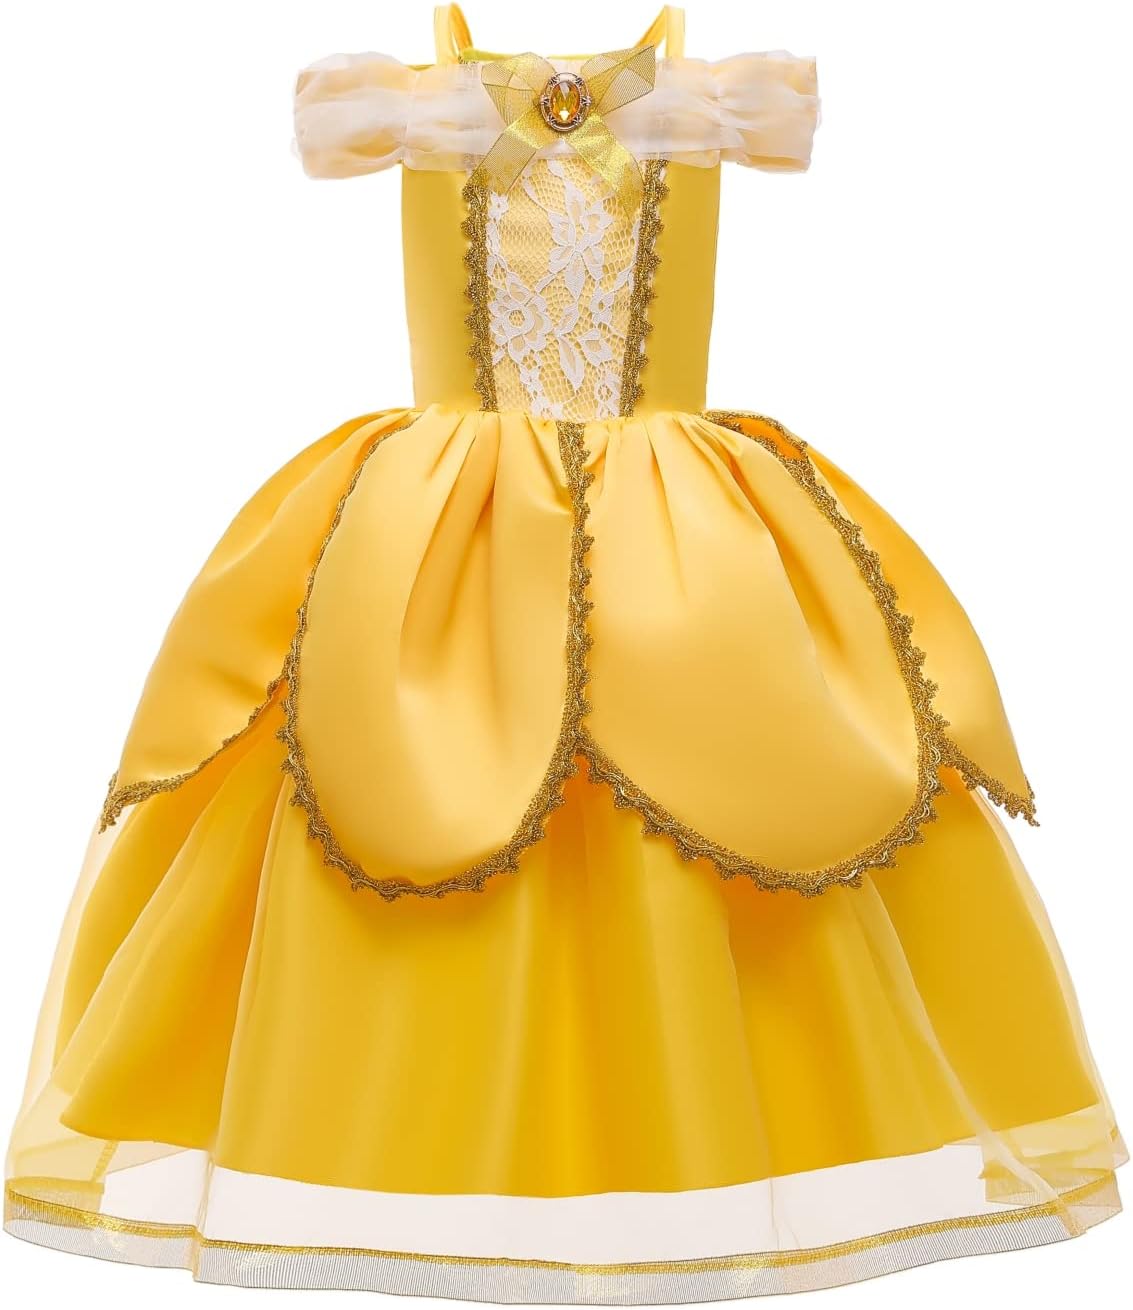 NOVOLAN Girls Princess Dress Children Princess Cosplay Dress Kids Party Attire, 4 Layer Skirt Yellow Short-Sleeved Long Dress, Costumes for Girls Castle Princess Style, Height 90cm-160cm